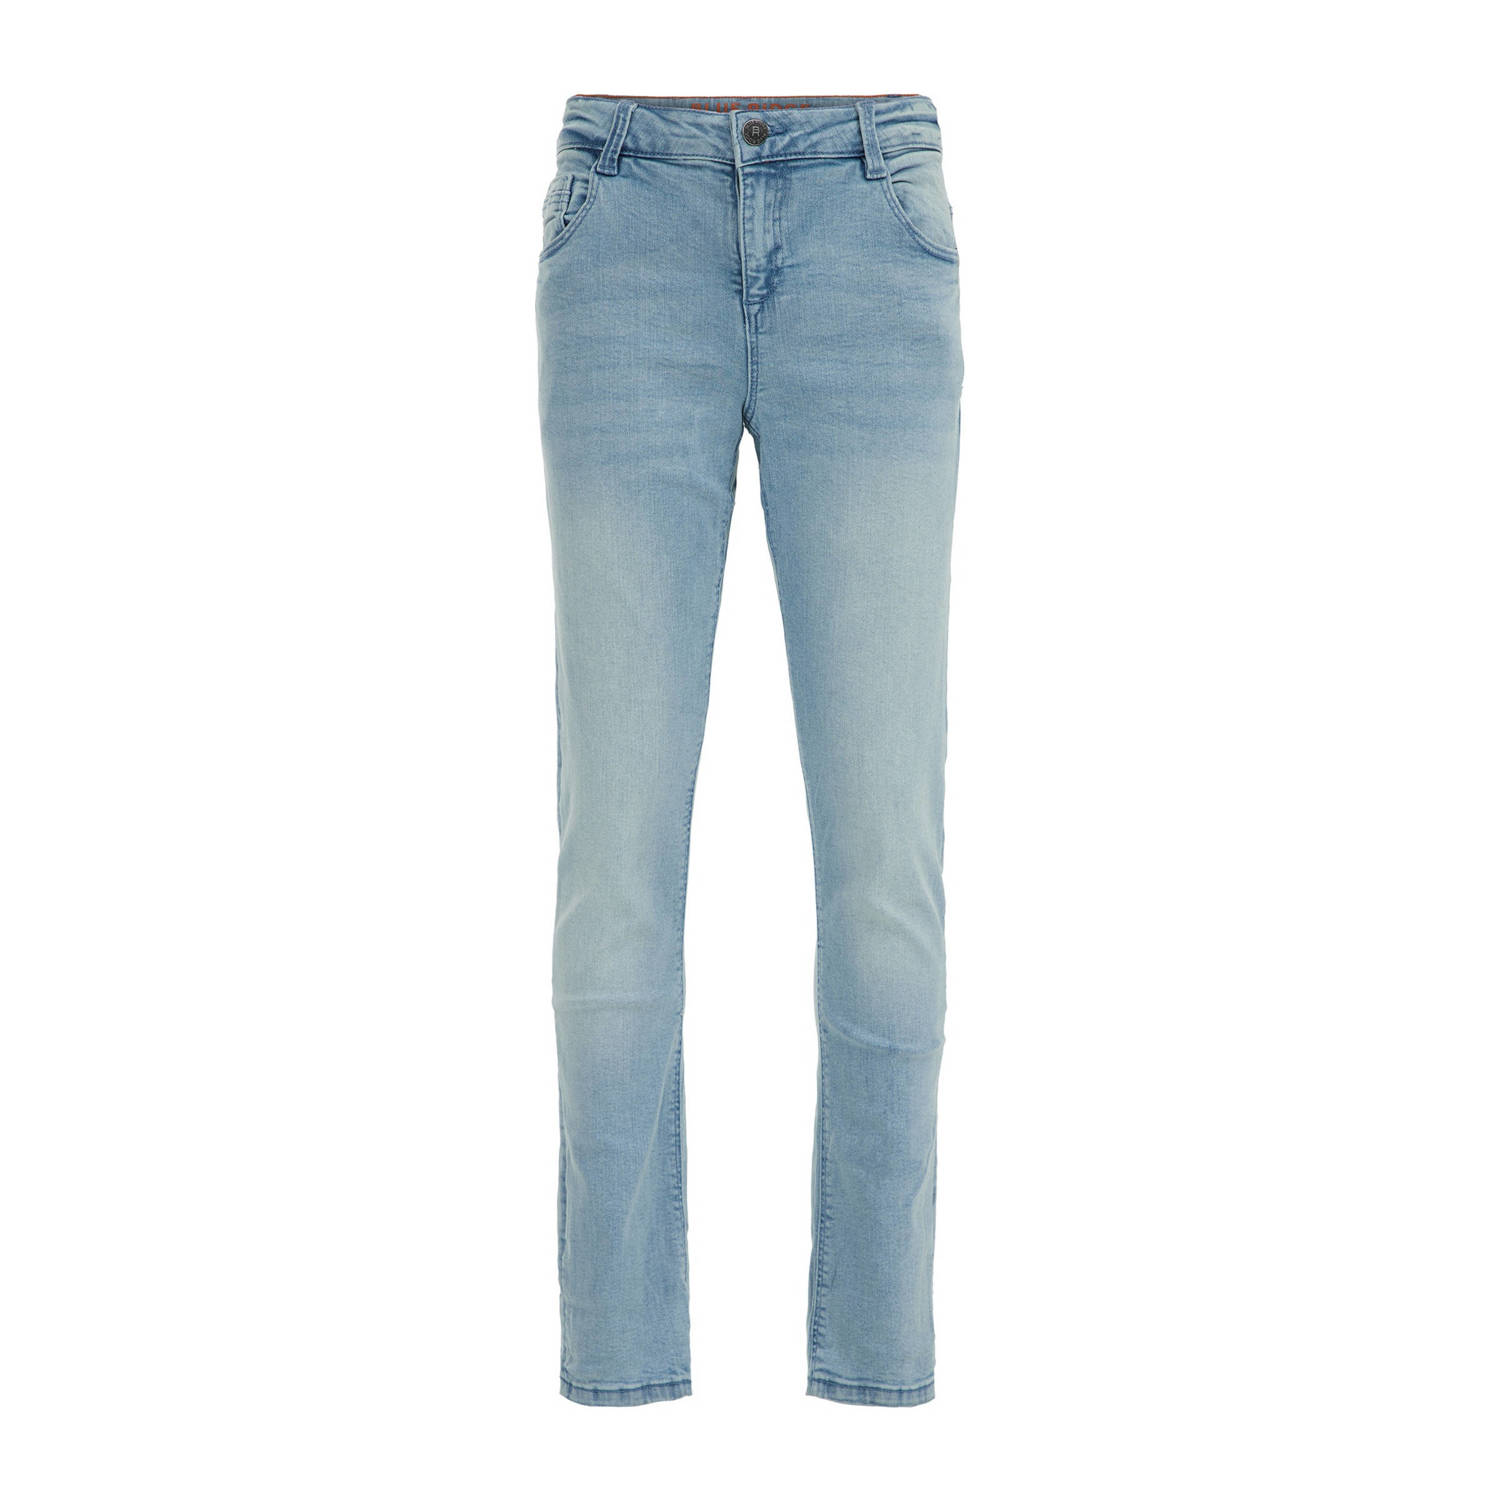 WE Fashion Blue Ridge tapered fit jeans light blue denim Blauw Jongens Stretchdenim 104